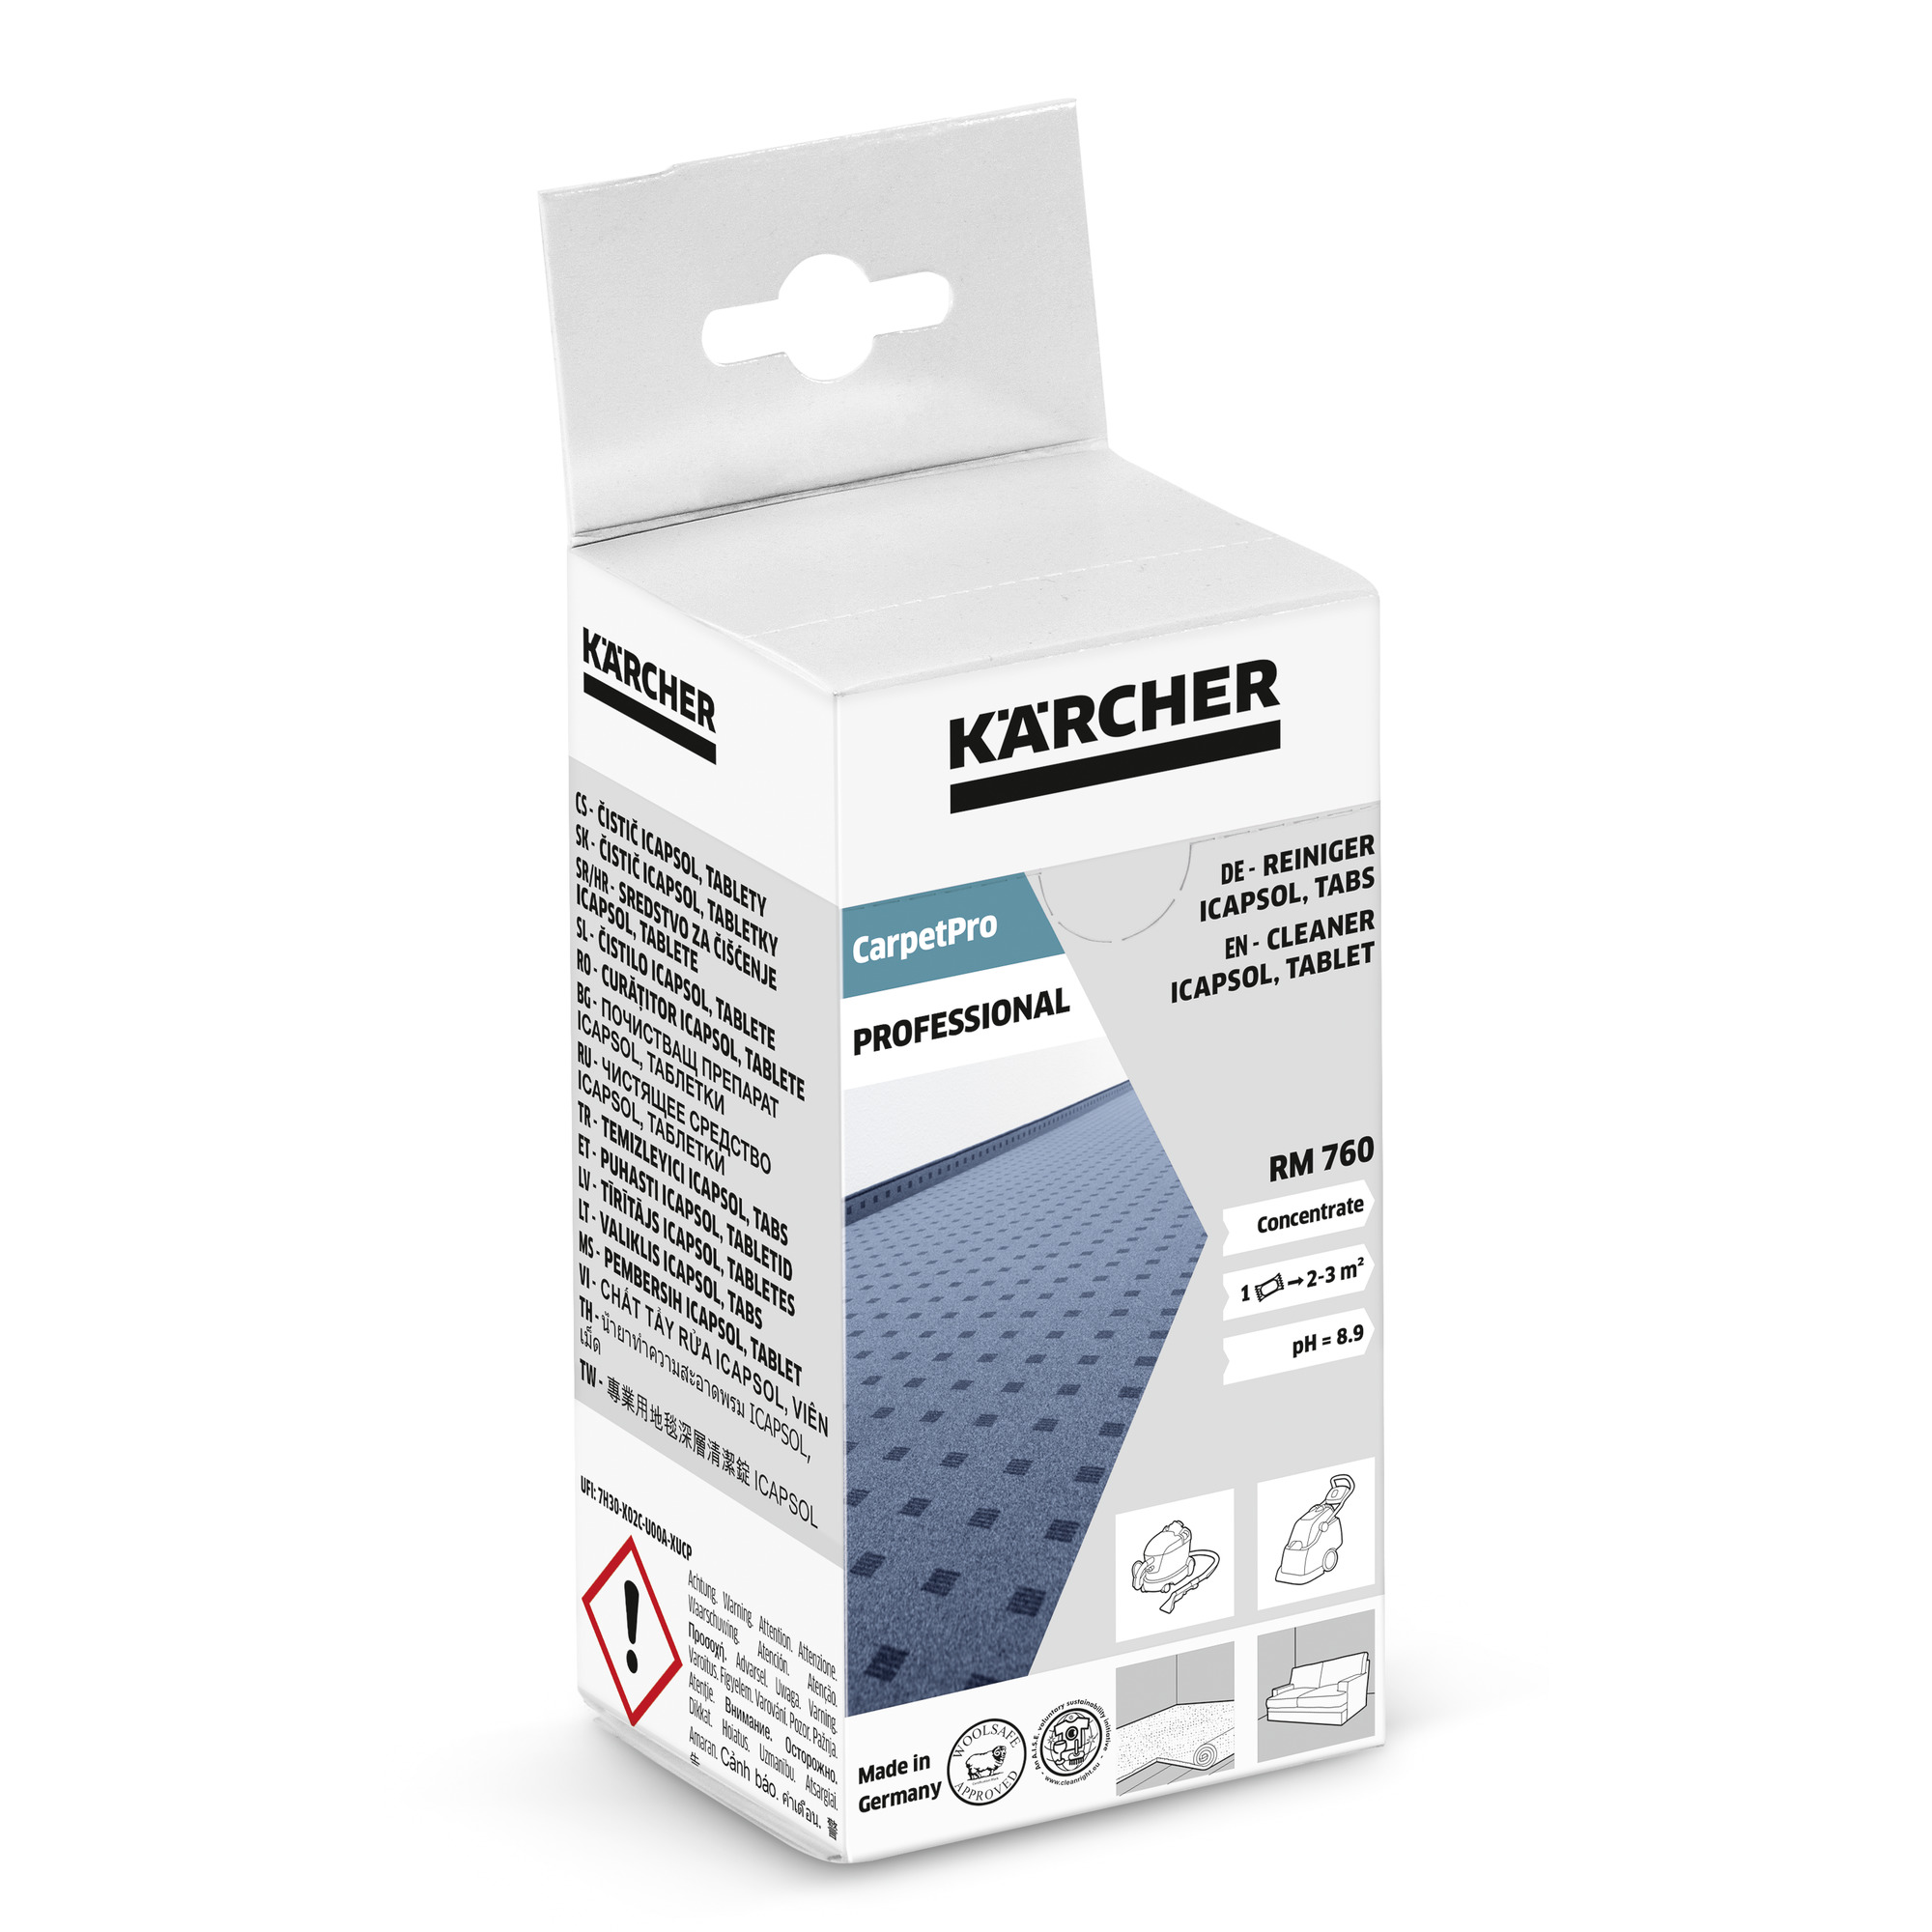 Kaercher CarpetPro Cleaner iCapsol RM 760 Tablet